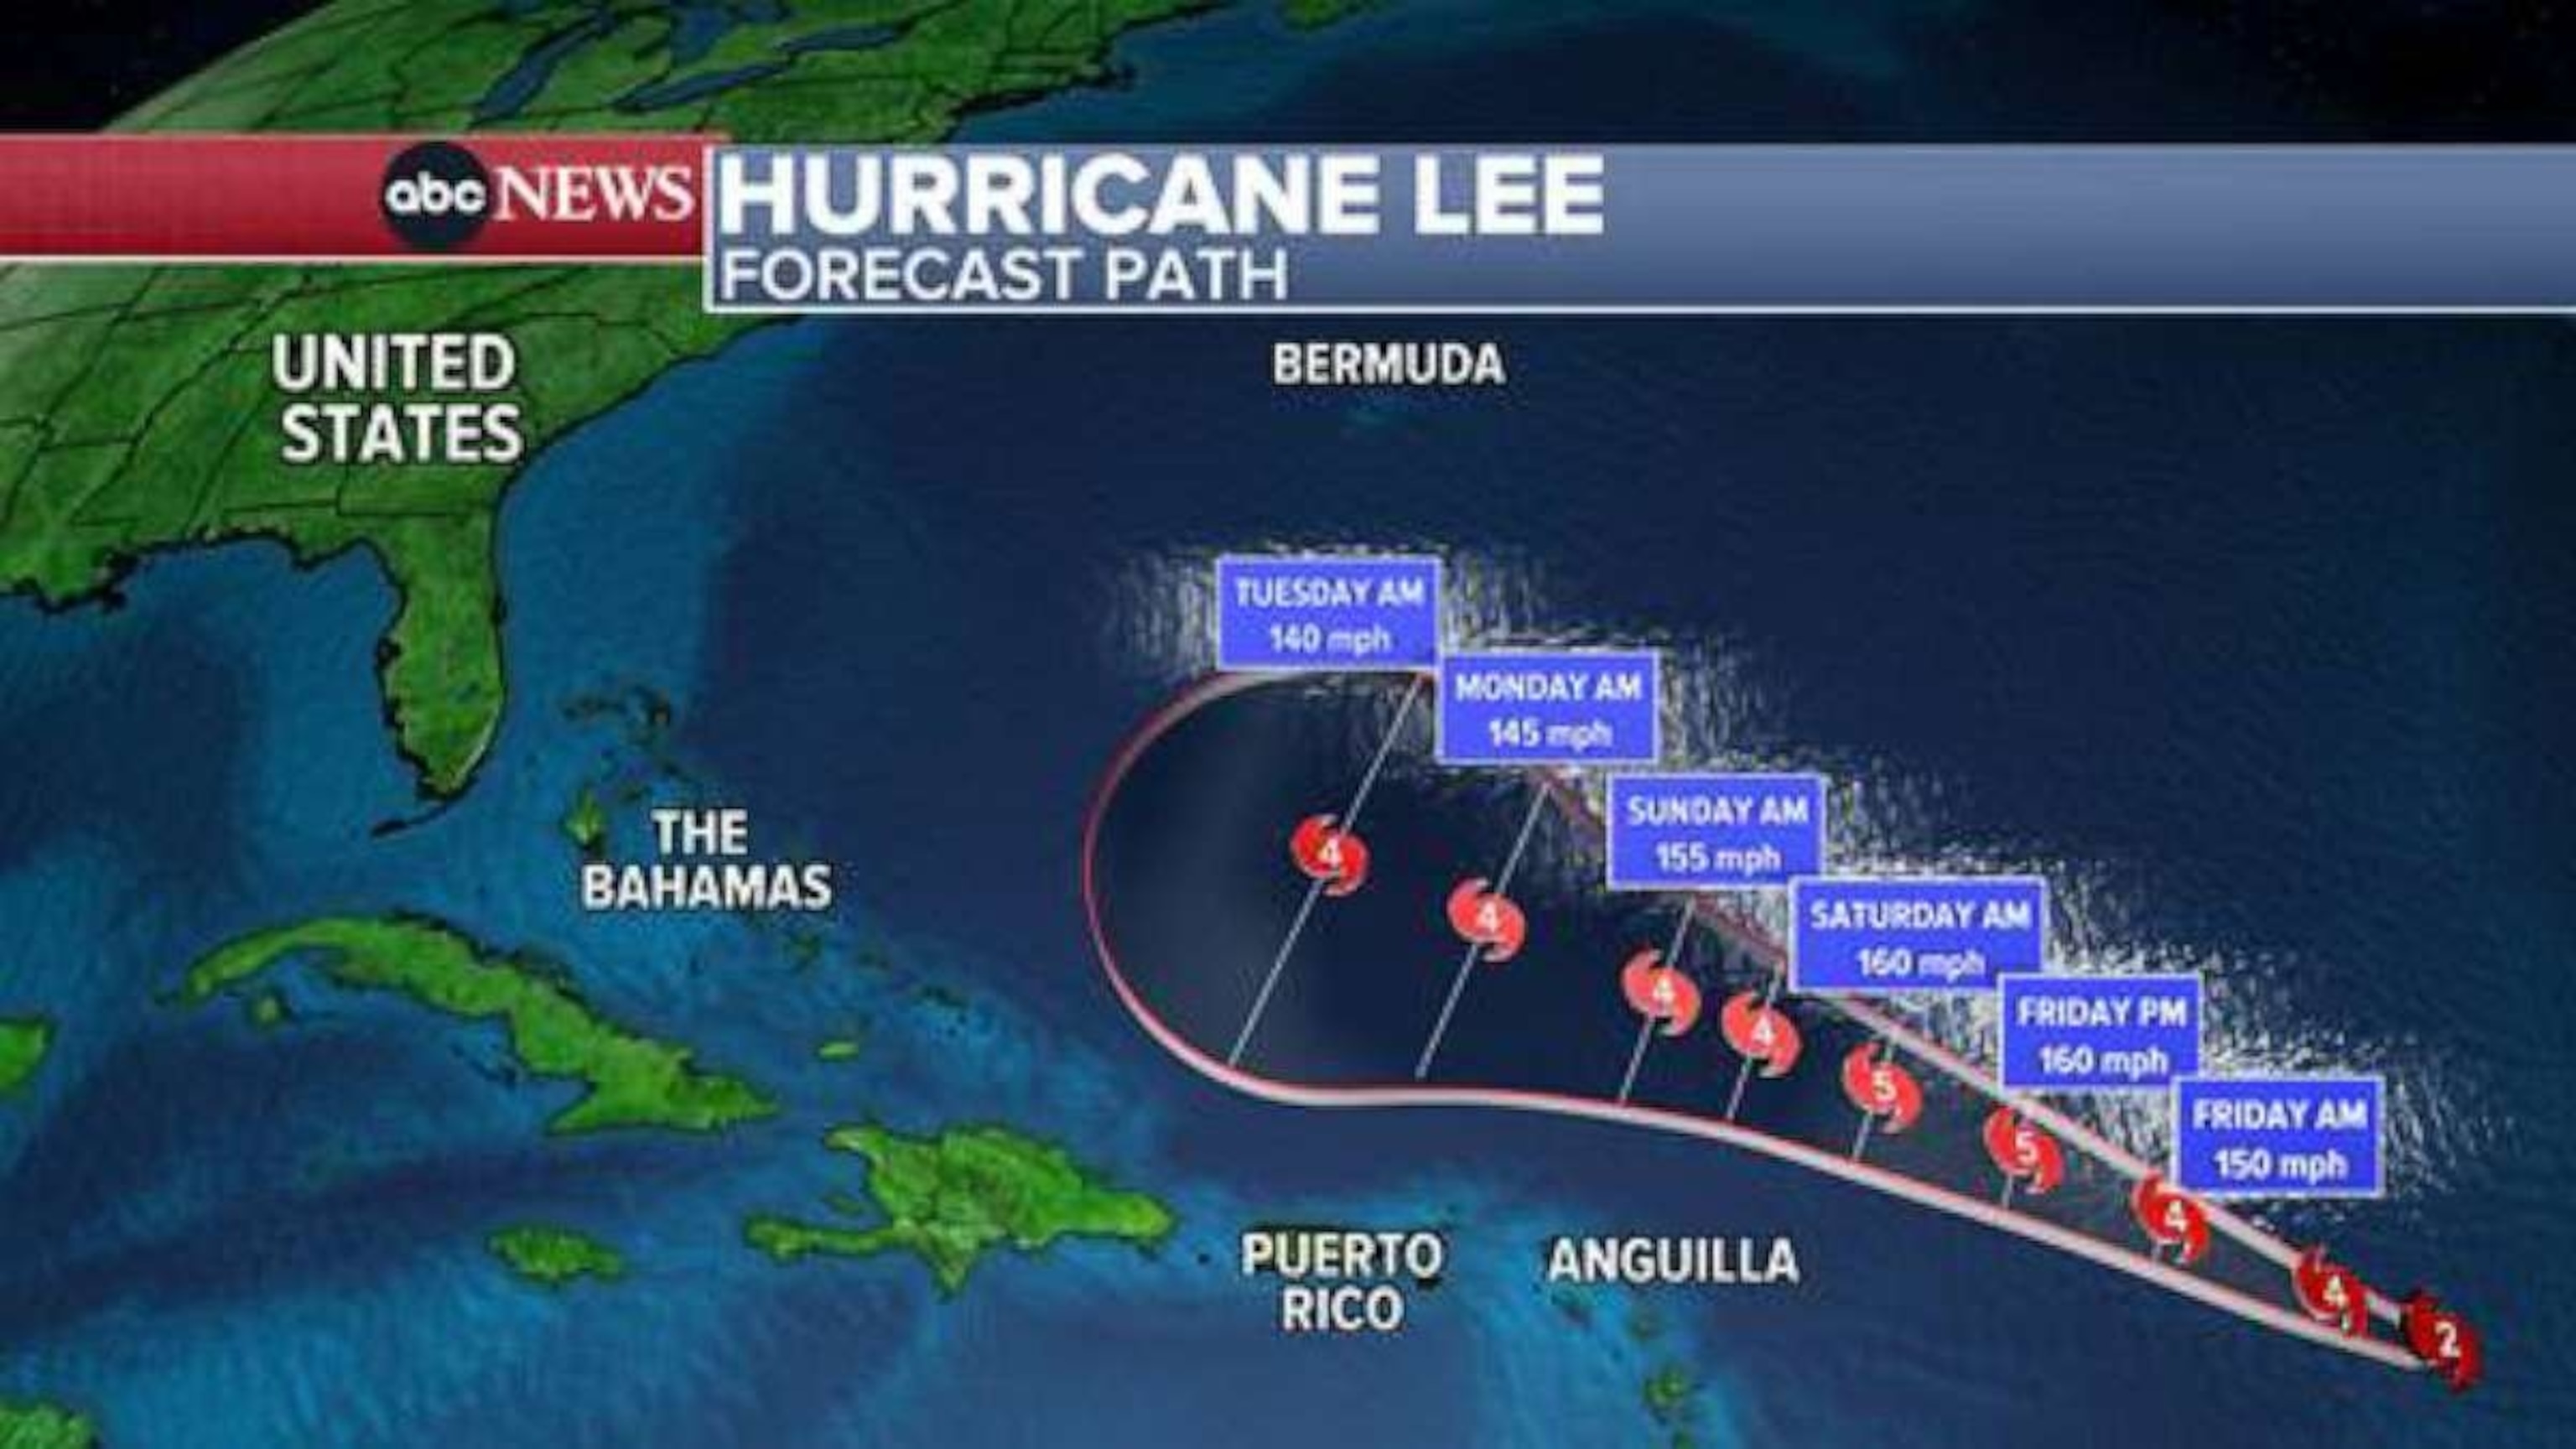 PHOTO: Hurricane Lee - Forecast Path